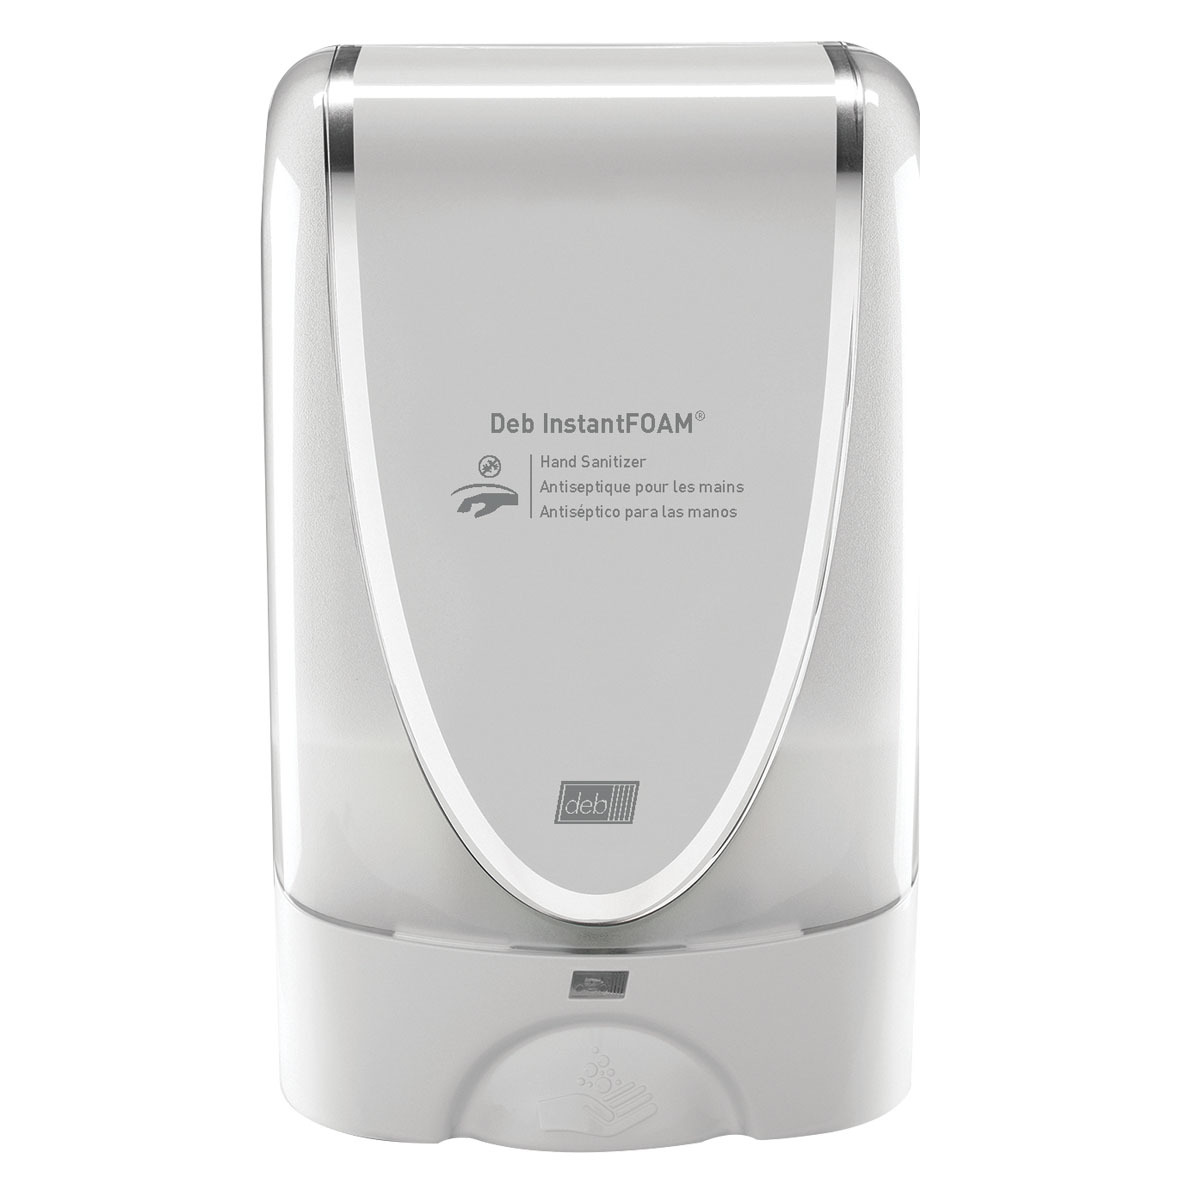 Deb 1 Liter Translucent White InstantFOAM® TouchFREE Dispenser (Availability restrictions apply.)